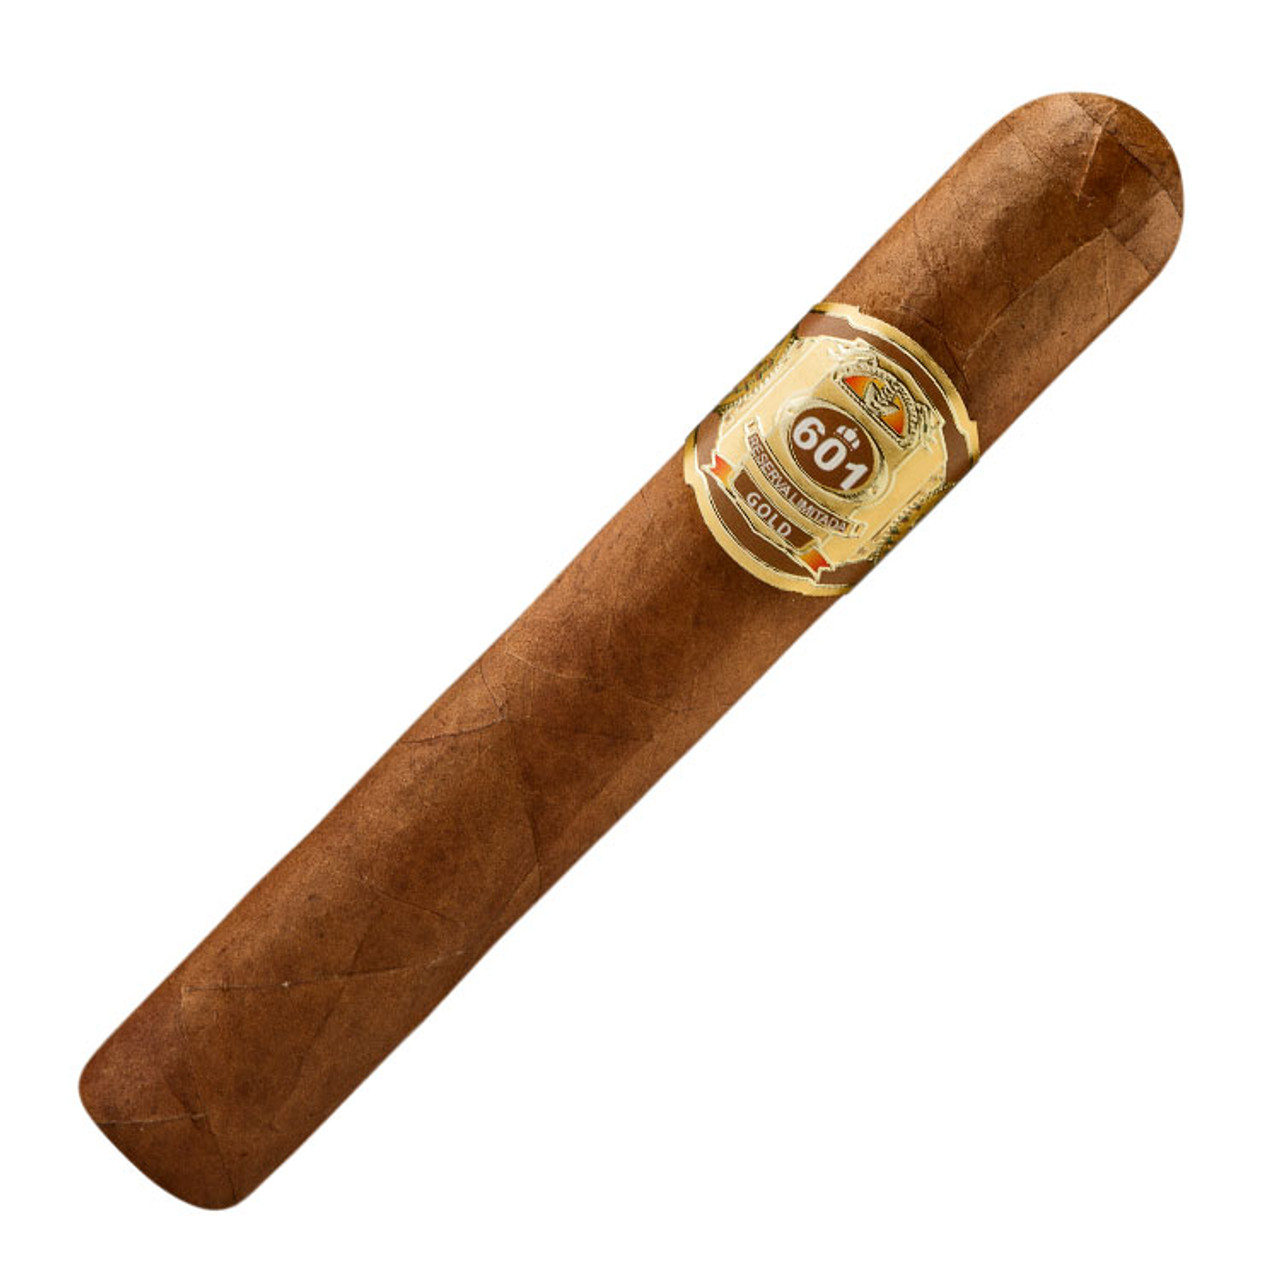 601 Gold Label Gordo Cigars - 6 x 60 Single